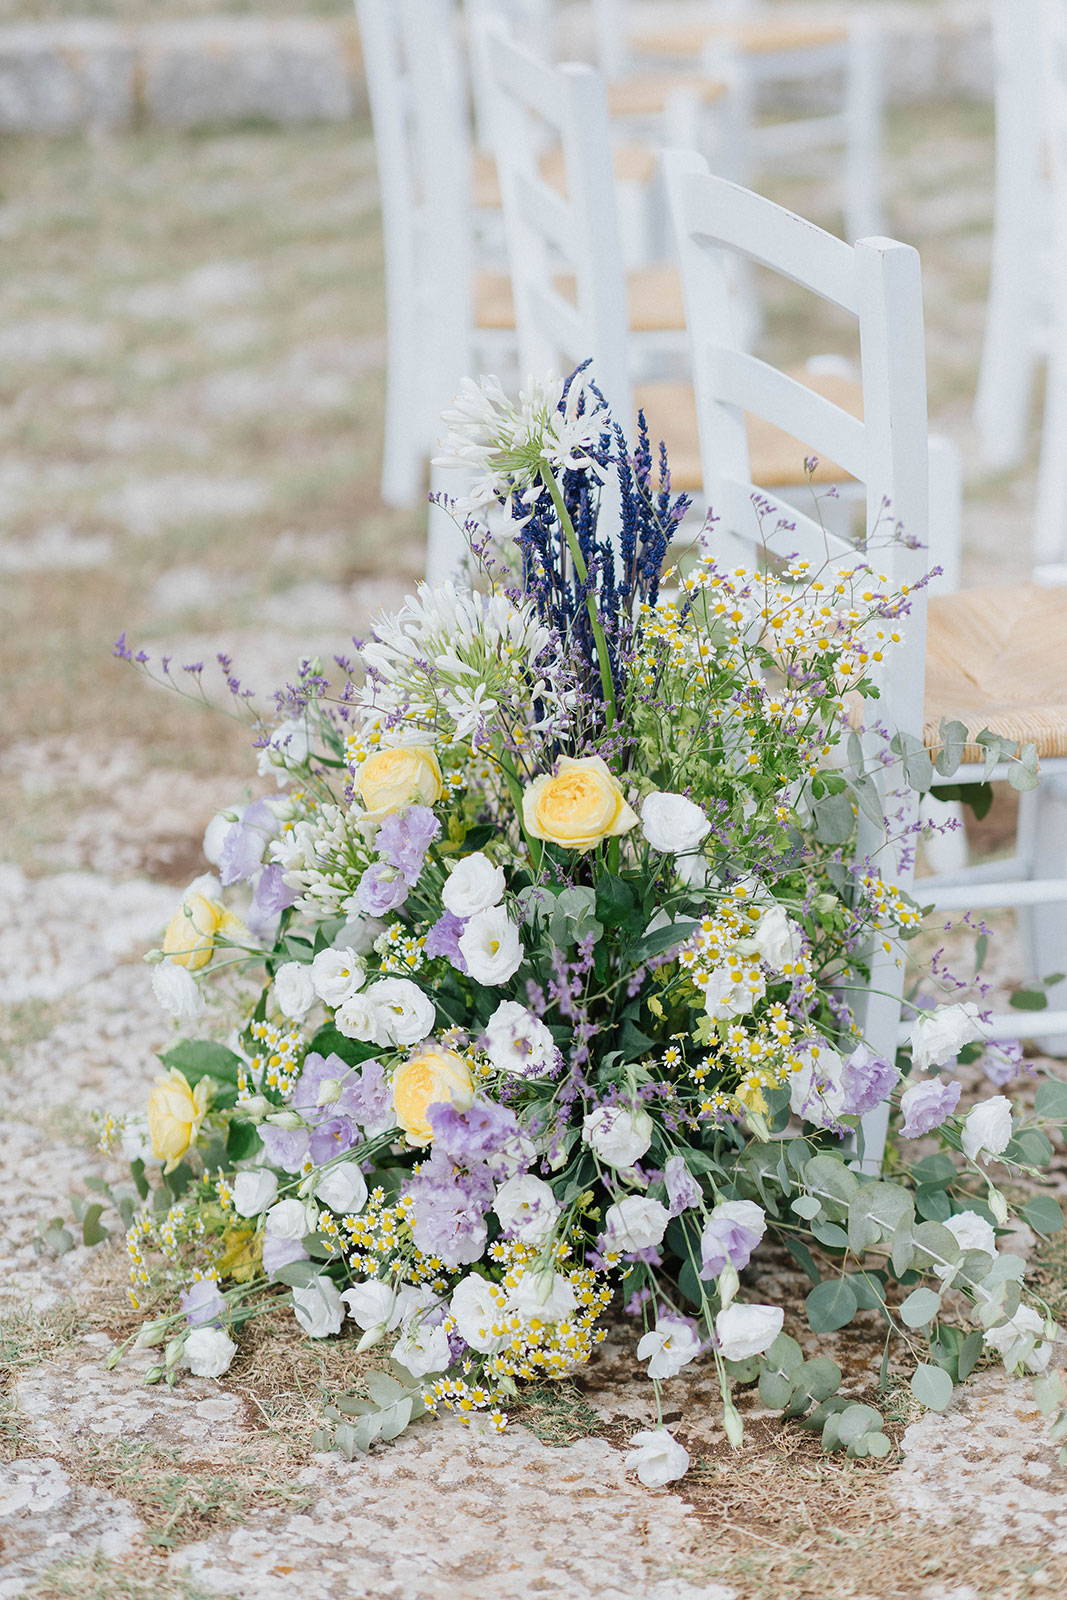 Floral arrangment near wedding chair